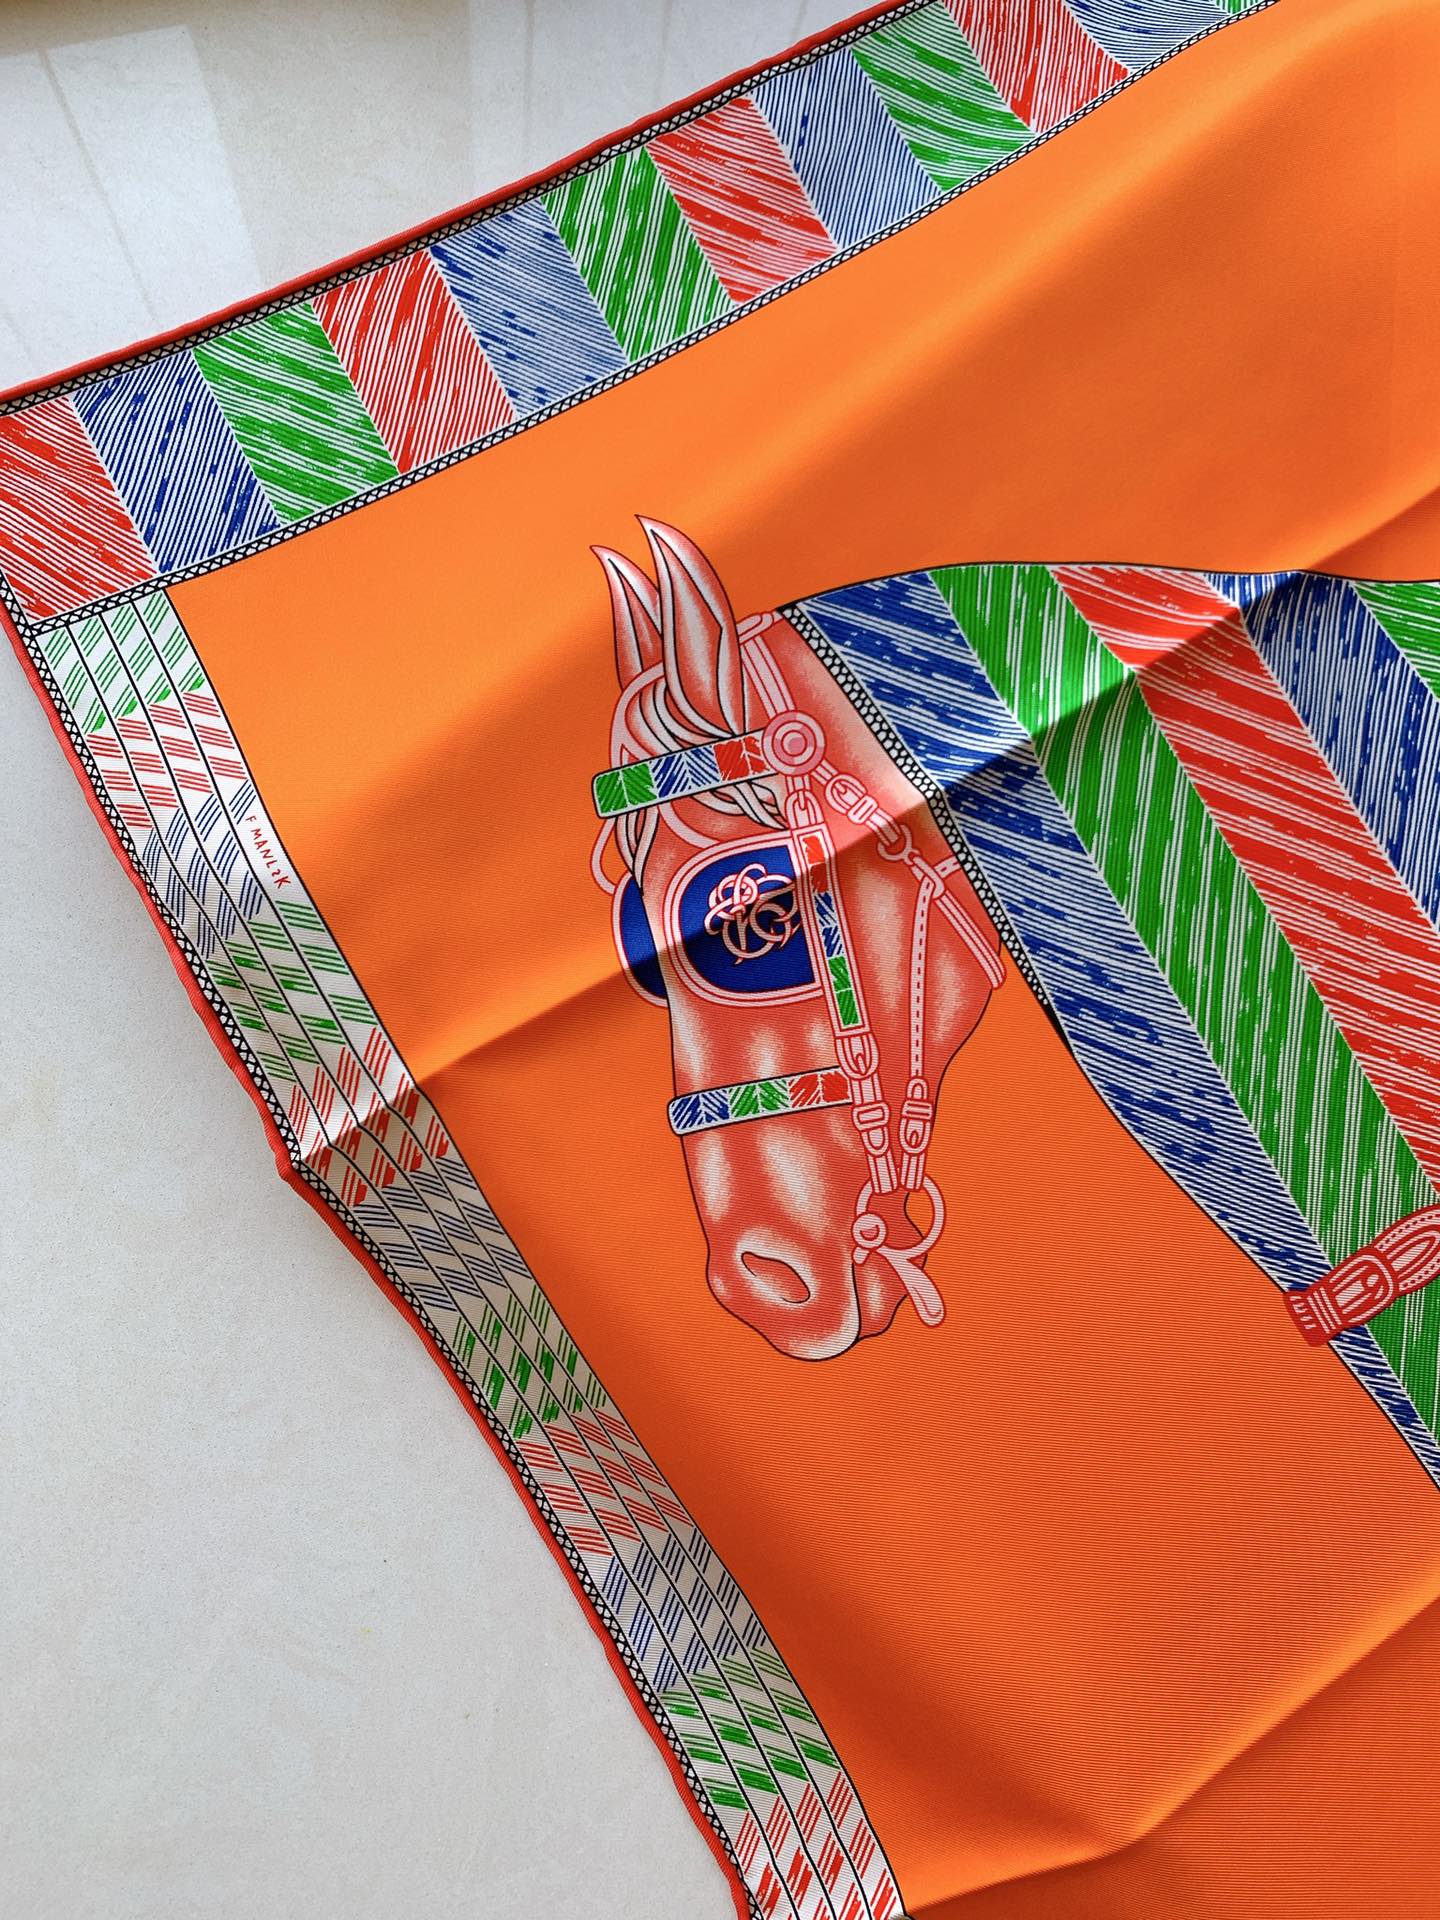 Hermes 新季度《骏马披挂》蚕丝方巾 《橙色》 20年新版骏马图案丝巾